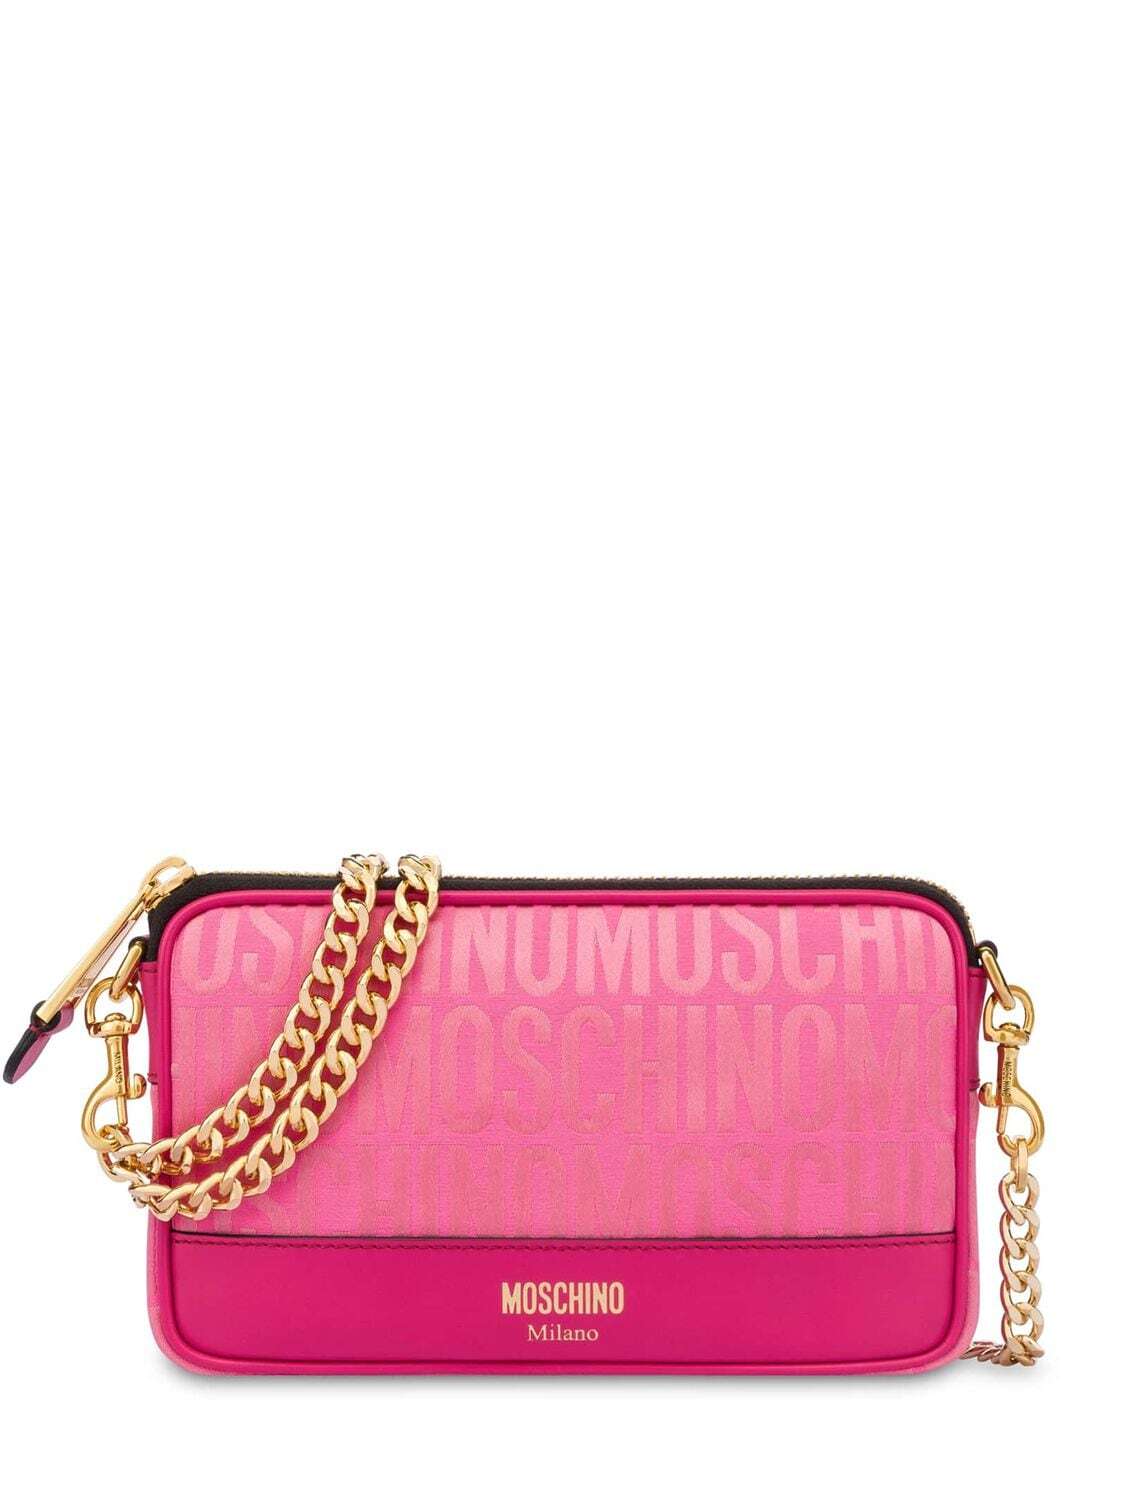 MOSCHINO Monogram Jacquard Nylon Shoulder Bag in pink